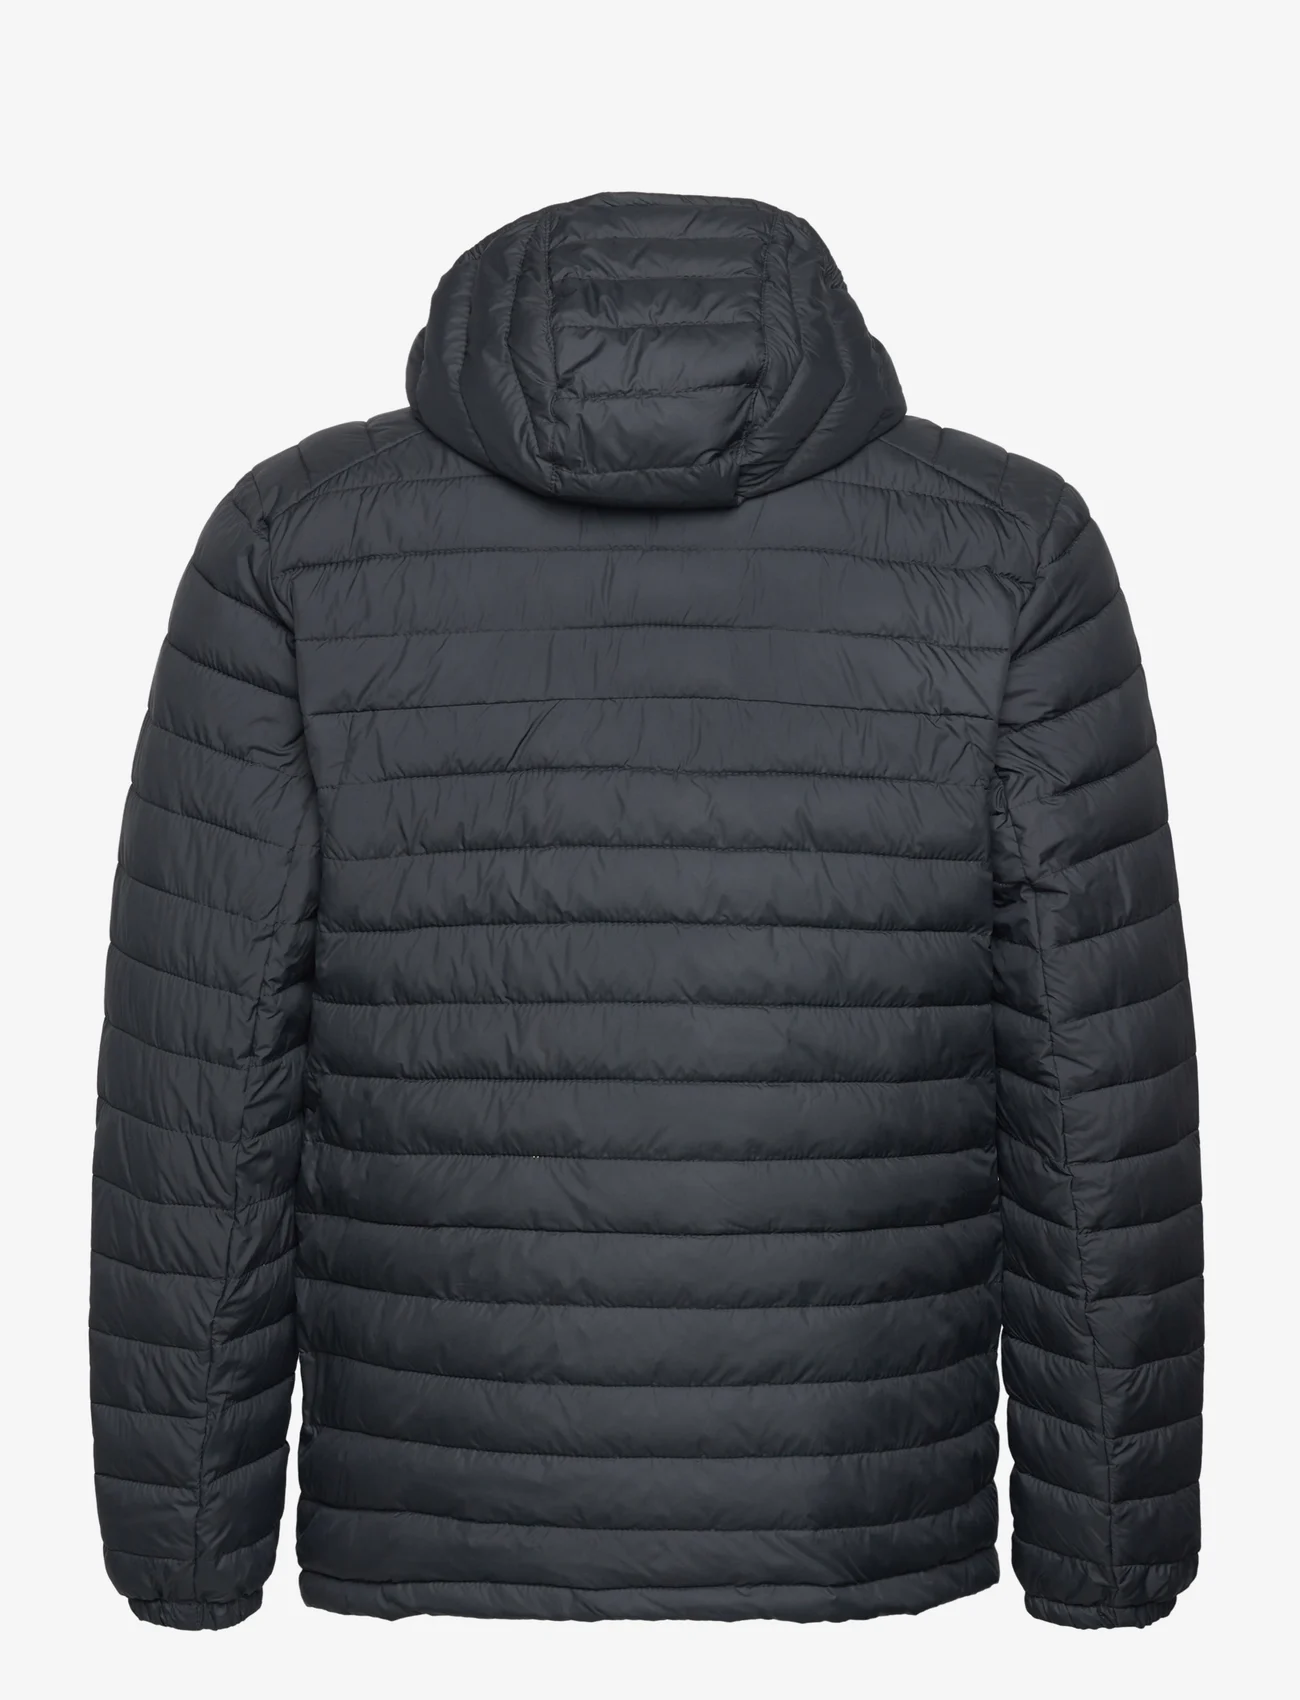 Columbia Sportswear - Silver Falls Hooded Jacket - padded jackets - black - 1